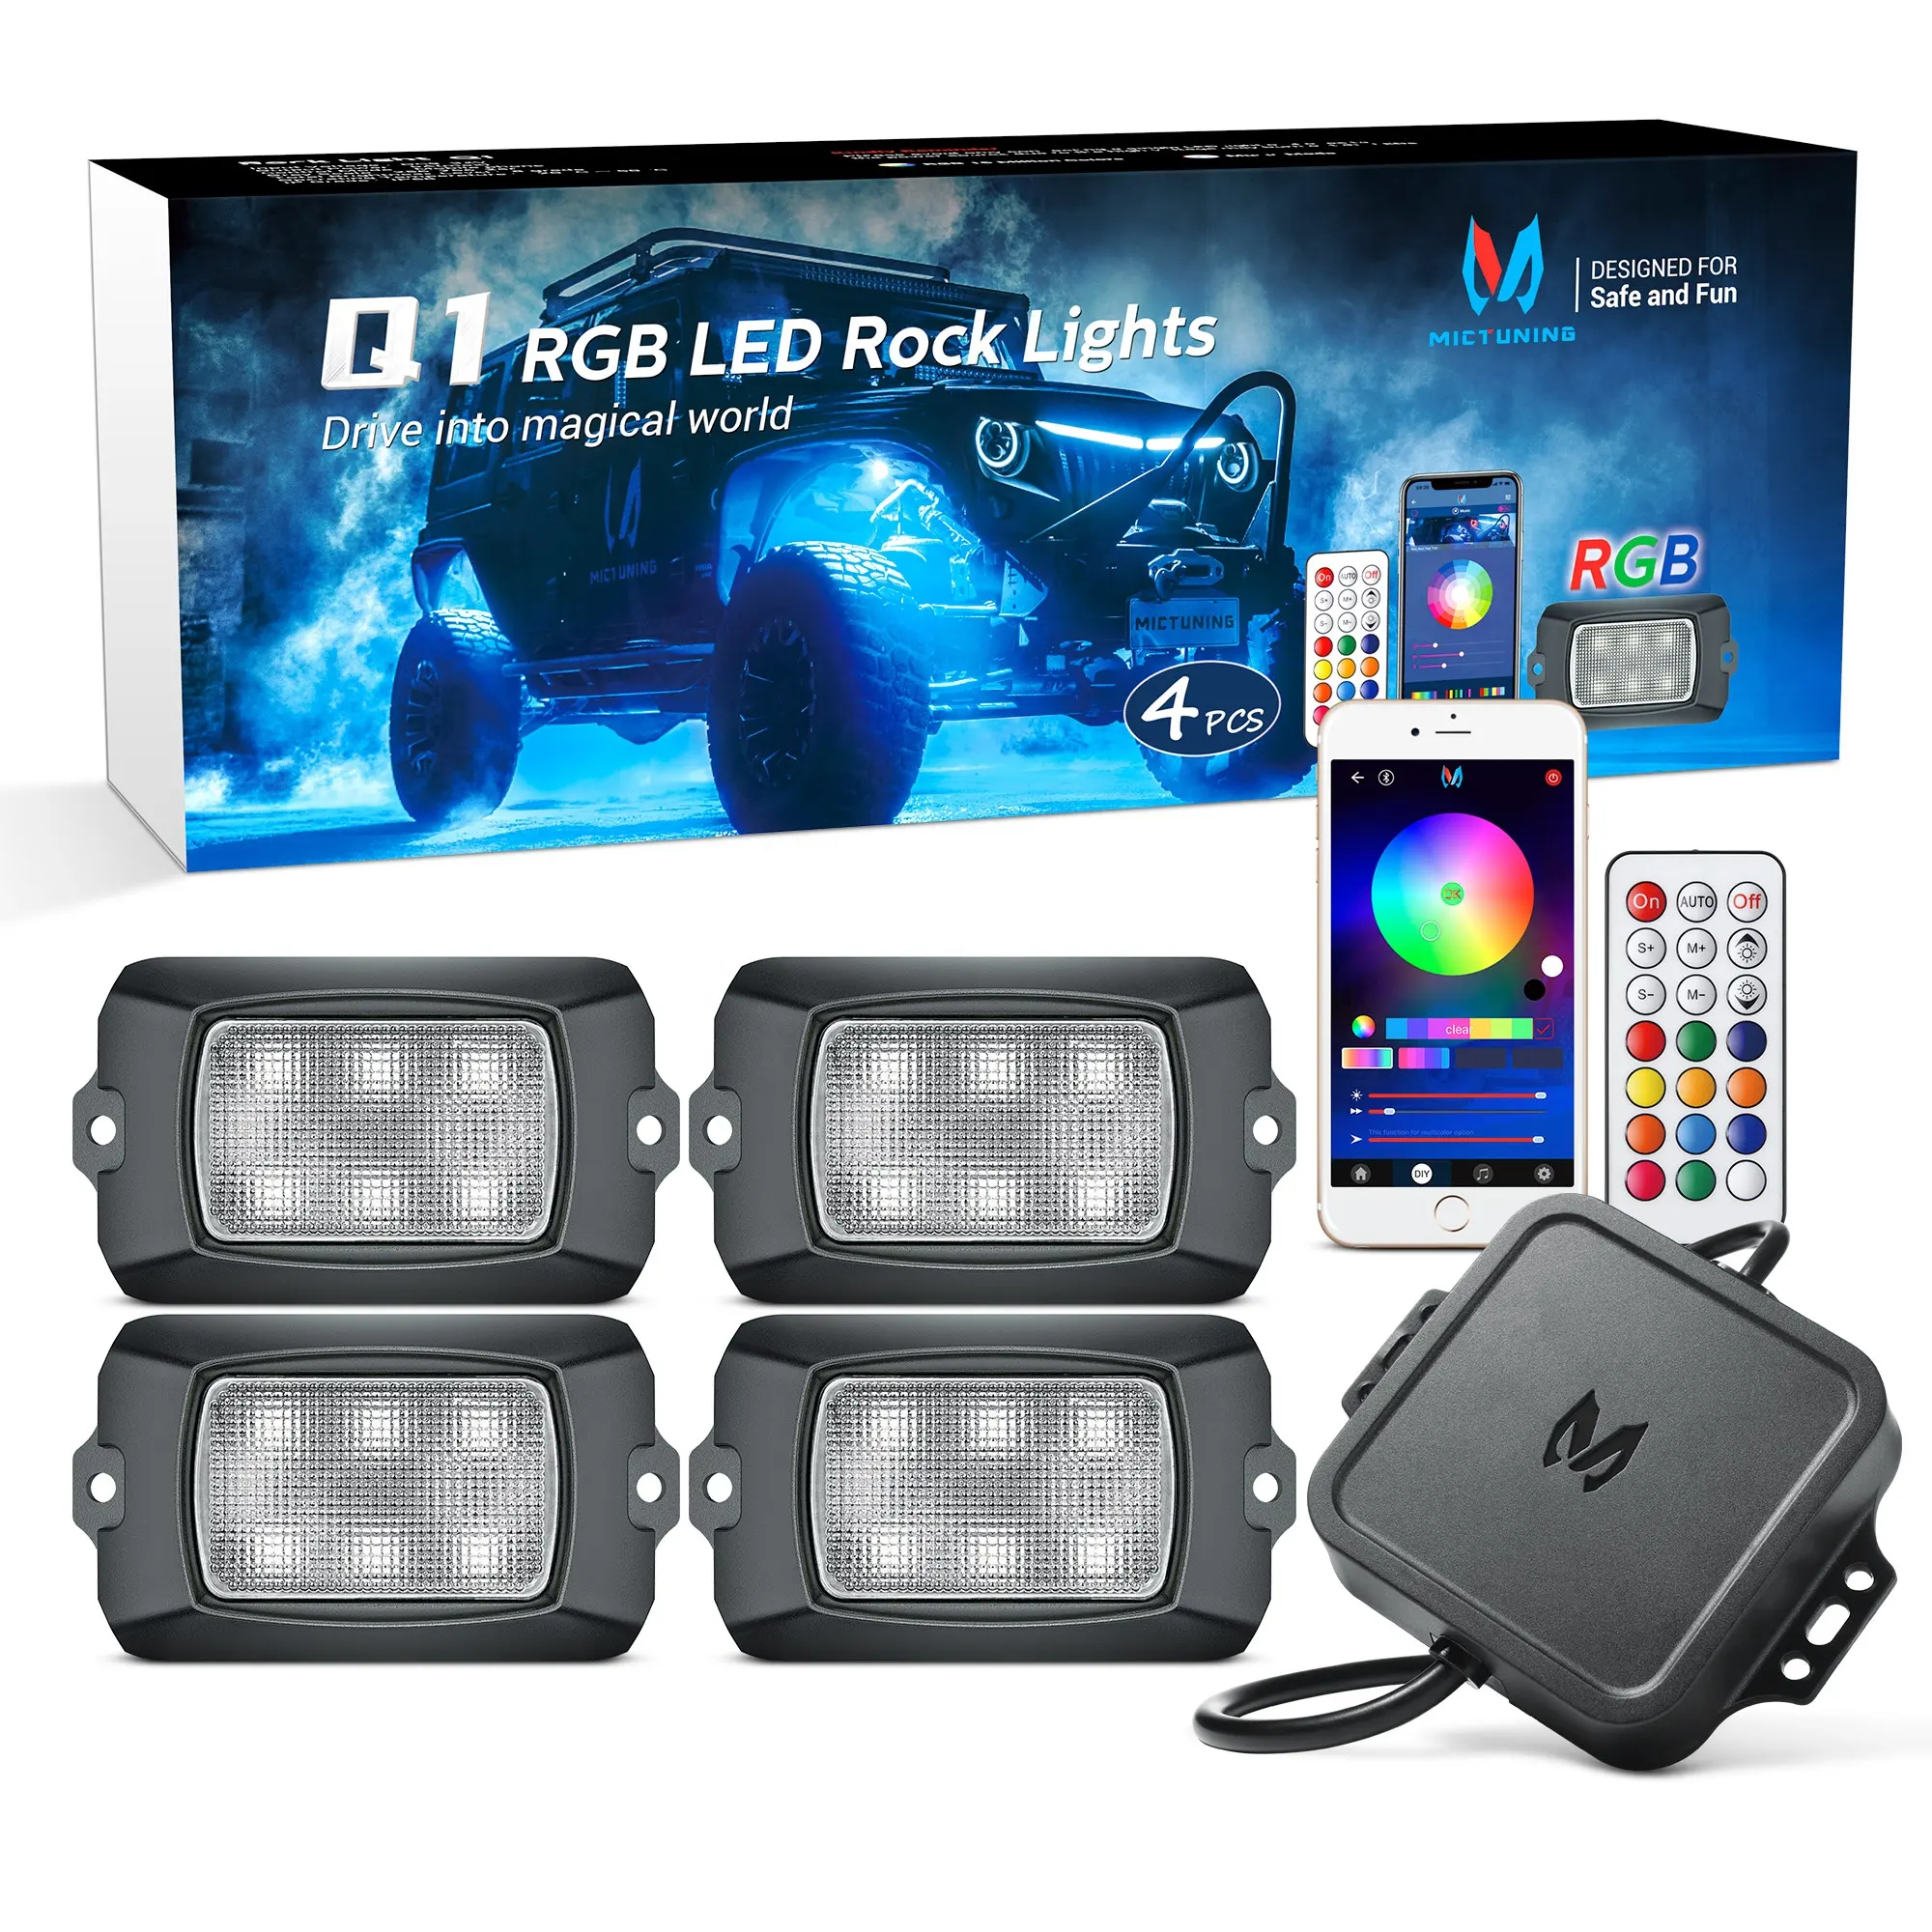 Q1 RGB 4 Pods MulticoloR Neon Car Led Lights Brightest Rock Lights Underglow Light for car